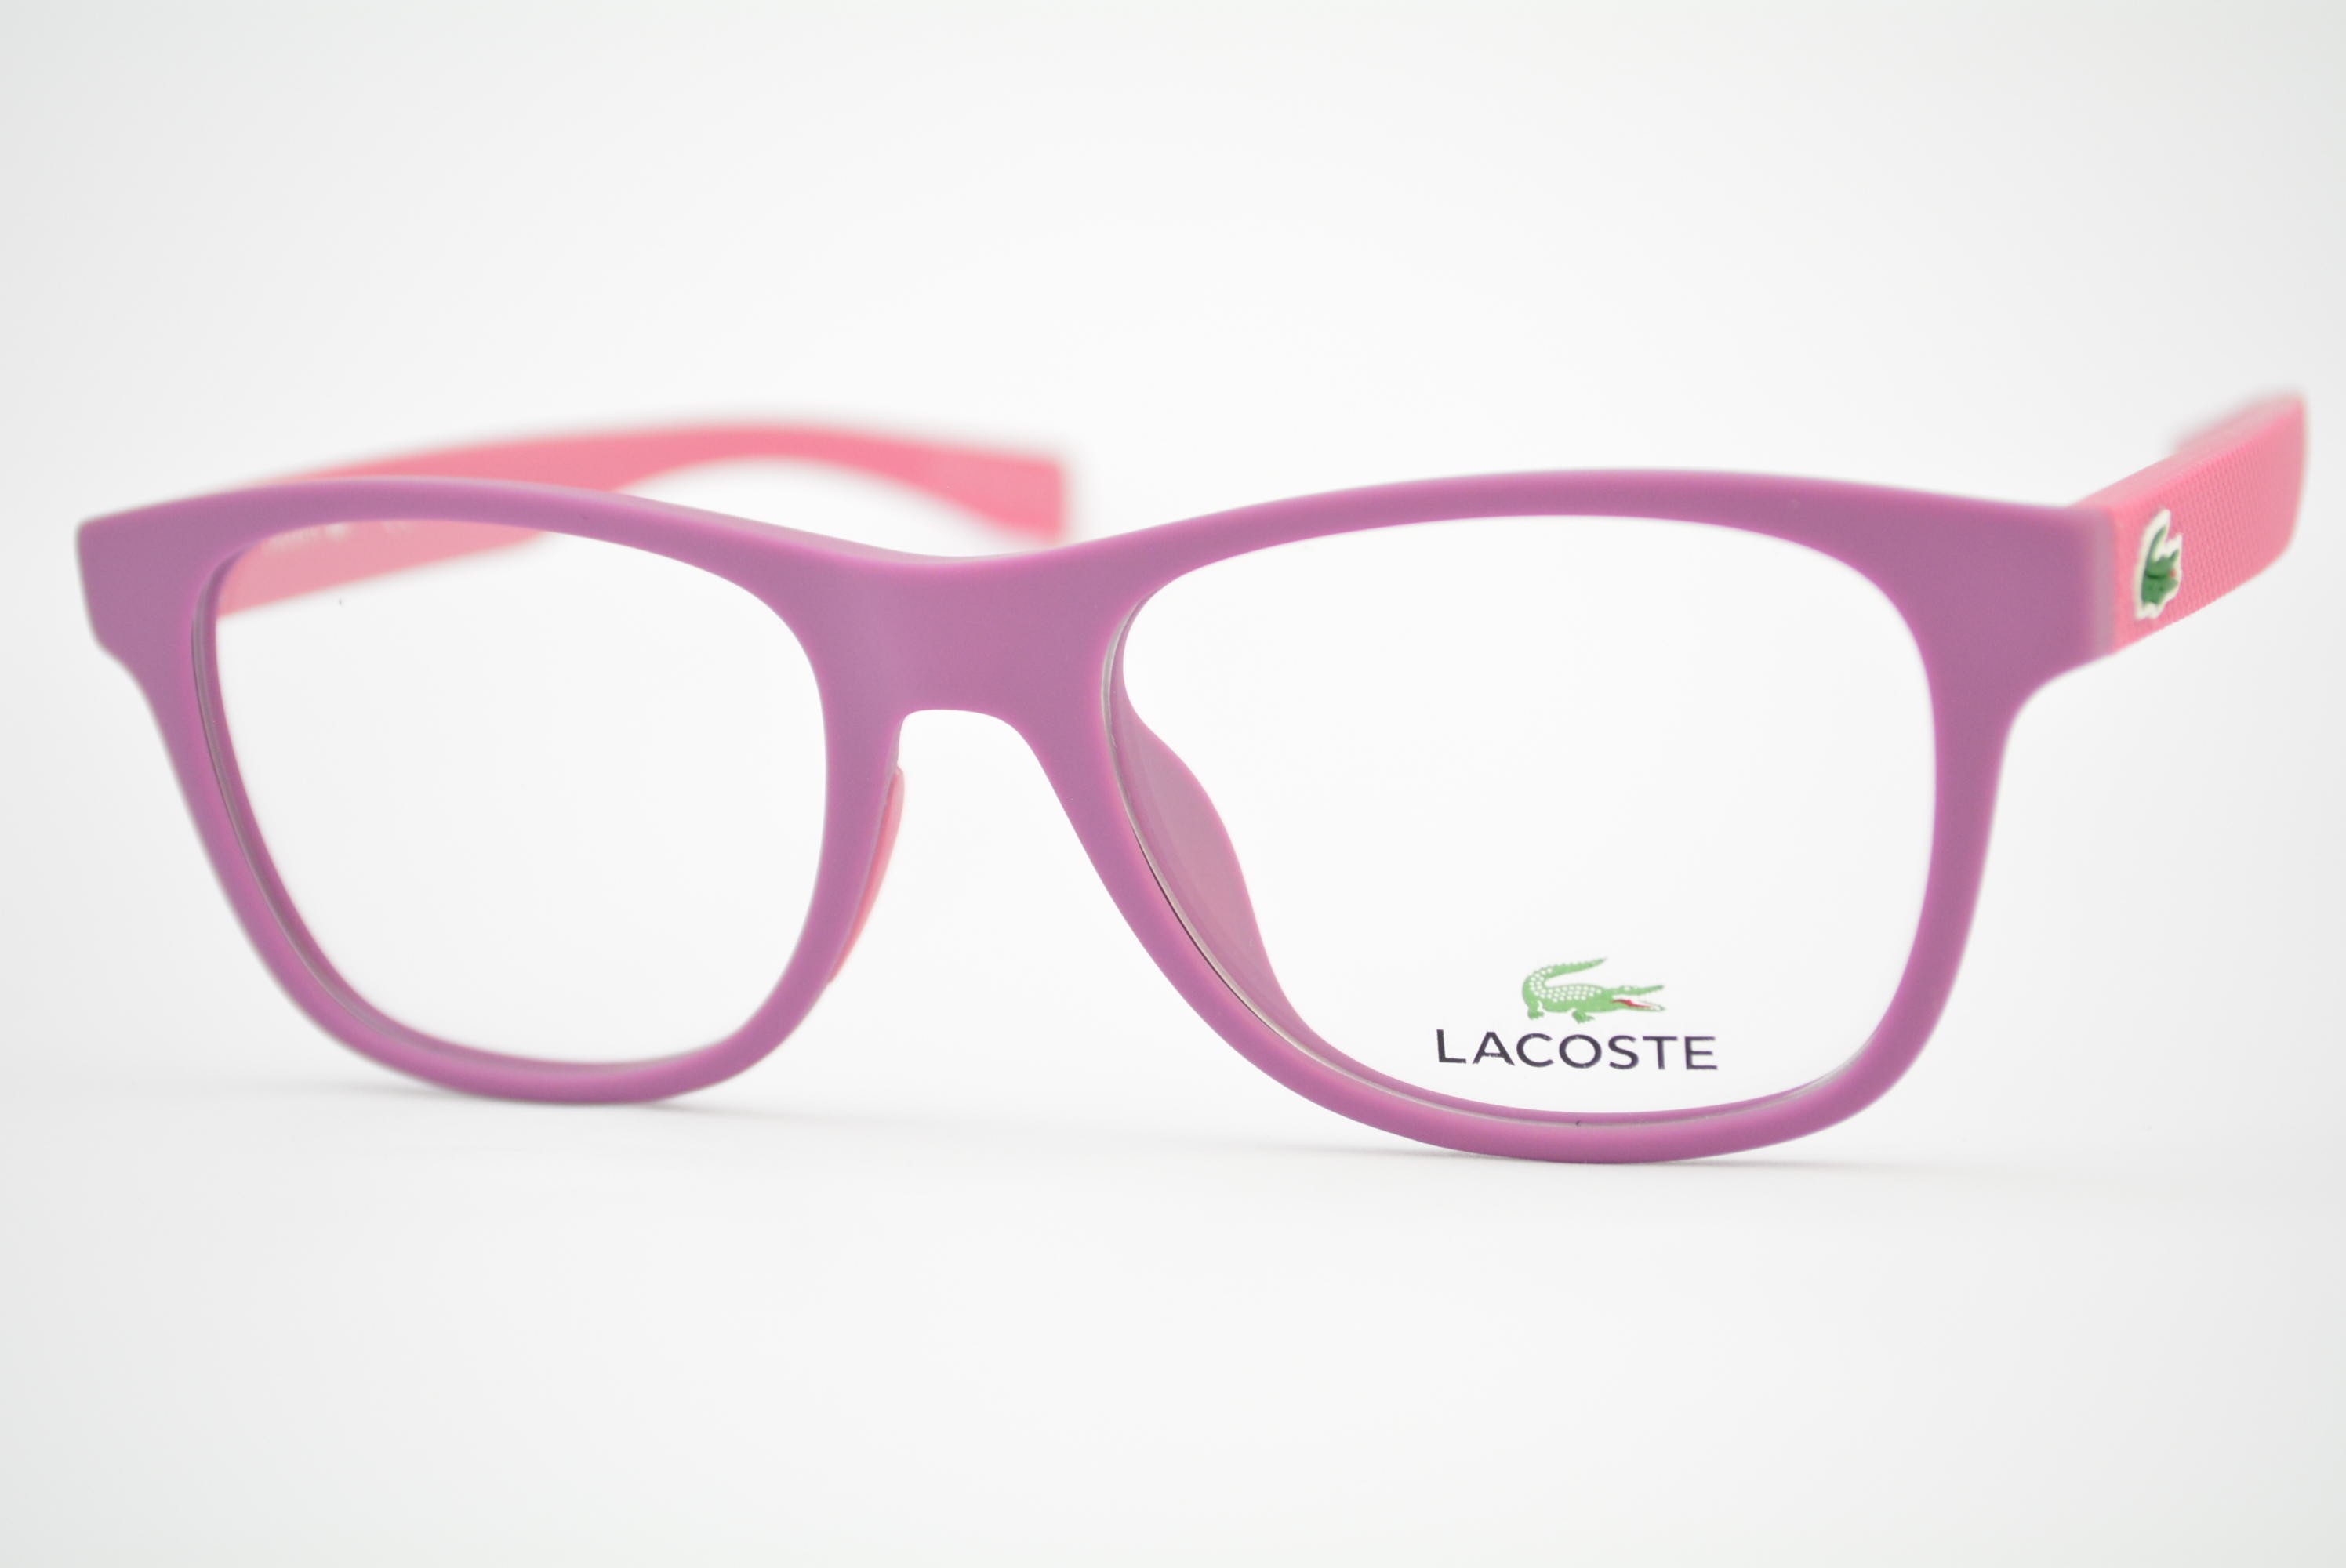 armação de óculos Lacoste Infantil mod L3620 526